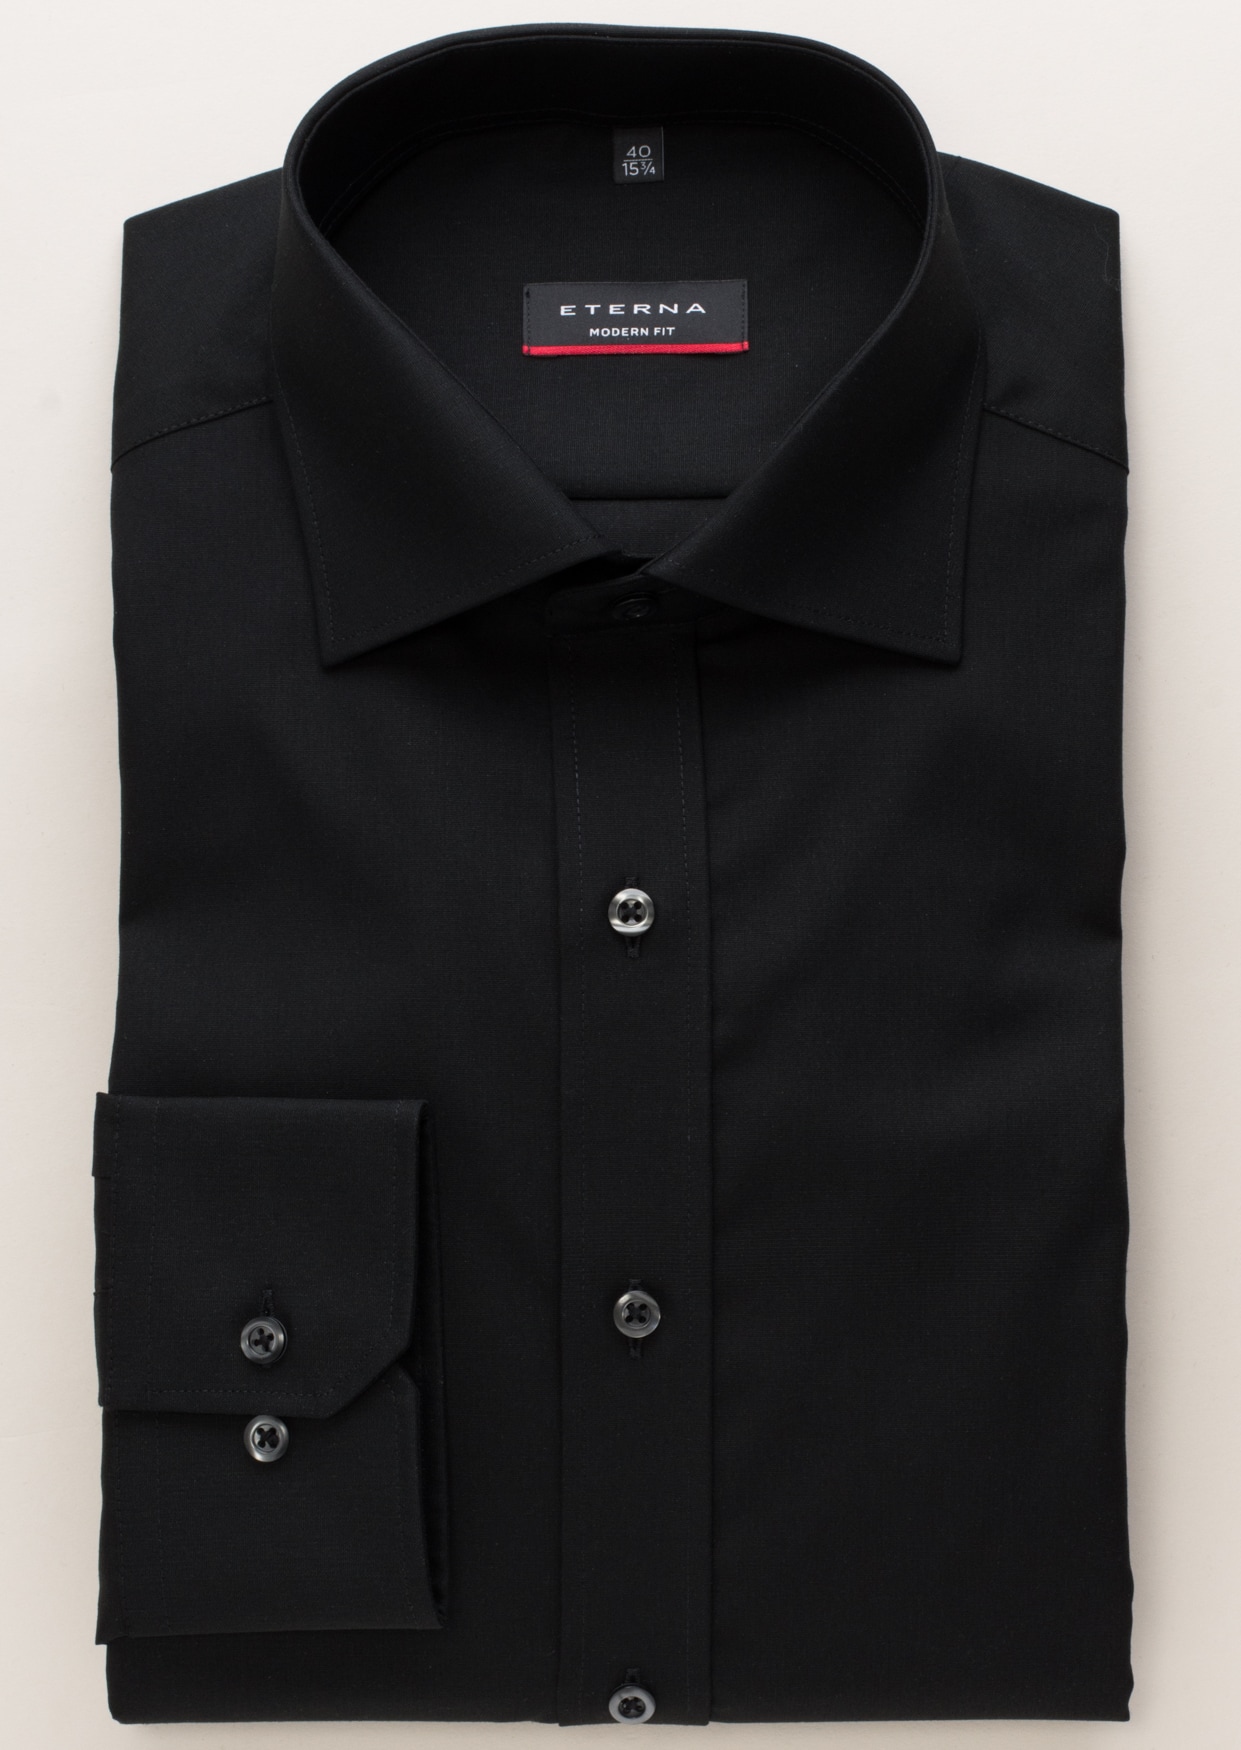 MODERN FIT Original | | | black black 1SH00113-03-91-42-1/1 Shirt | 42 in long sleeve plain